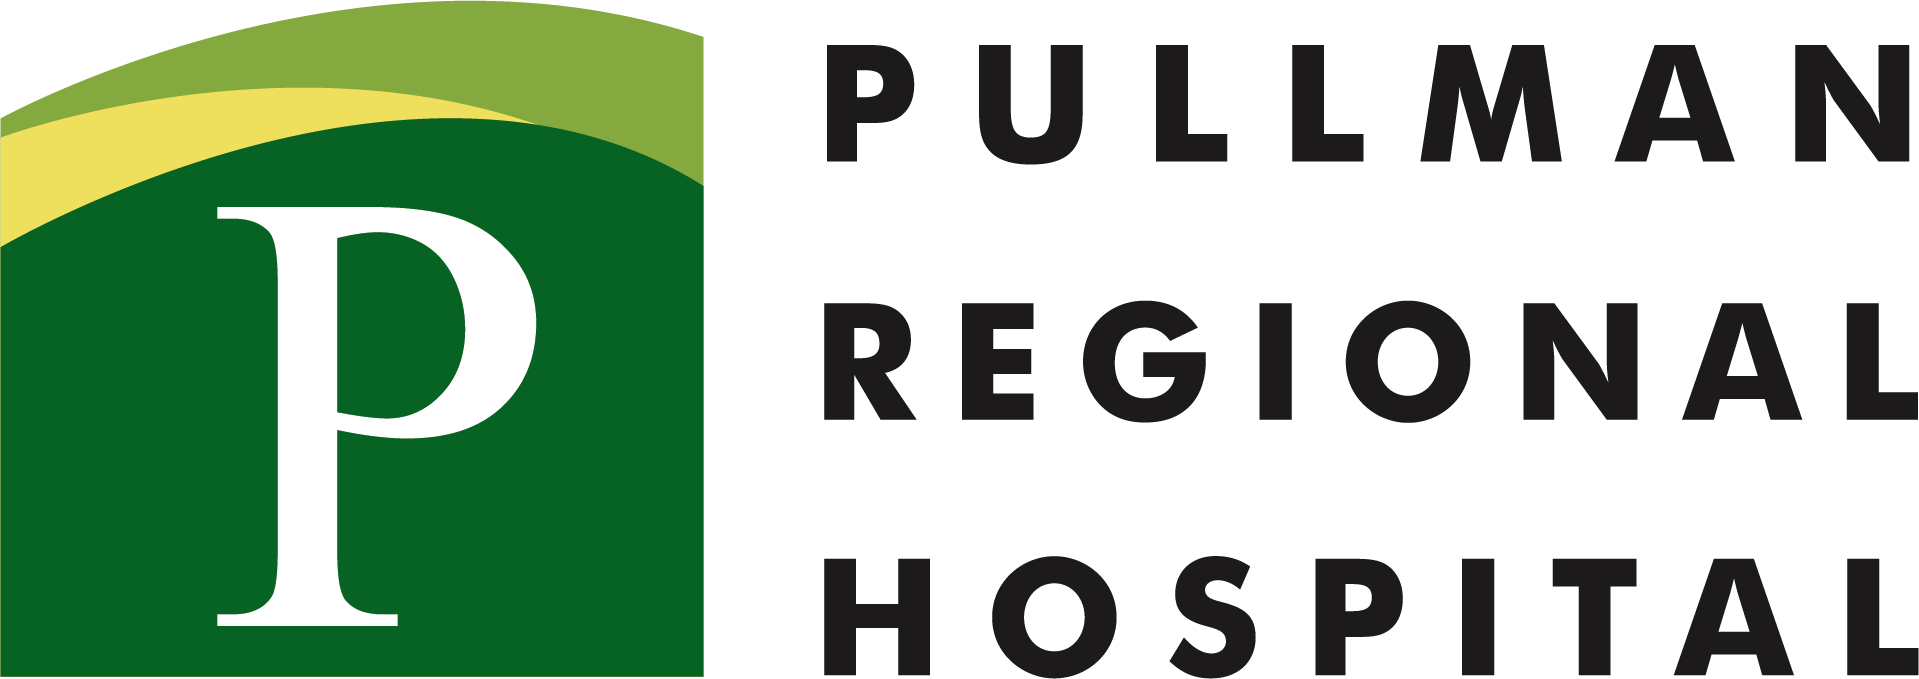 https://growthzonesitesprod.azureedge.net/wp-content/uploads/sites/3466/2022/11/Pullman-Regional-Hospital_300dpi.png